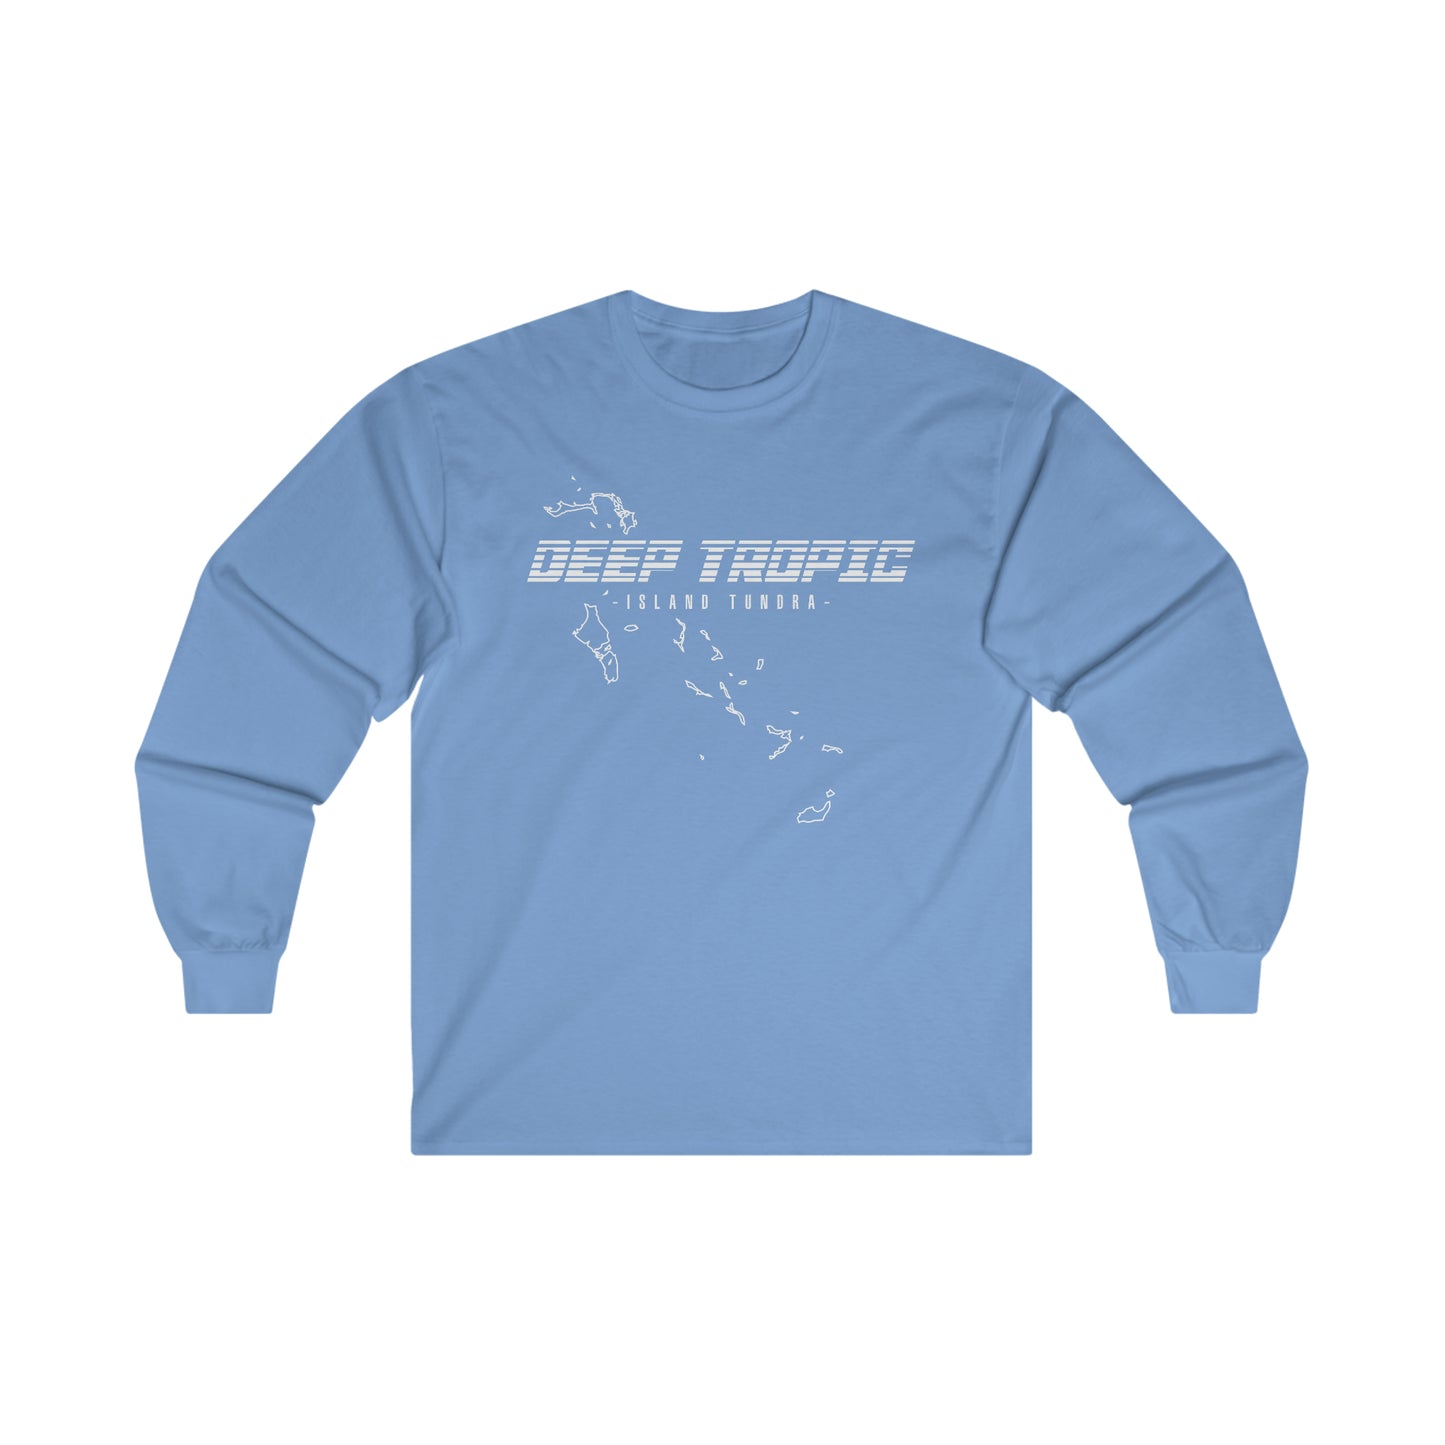 Island Tundra | Various Colors | Deep Tropic Long Sleeve Tee Shirt